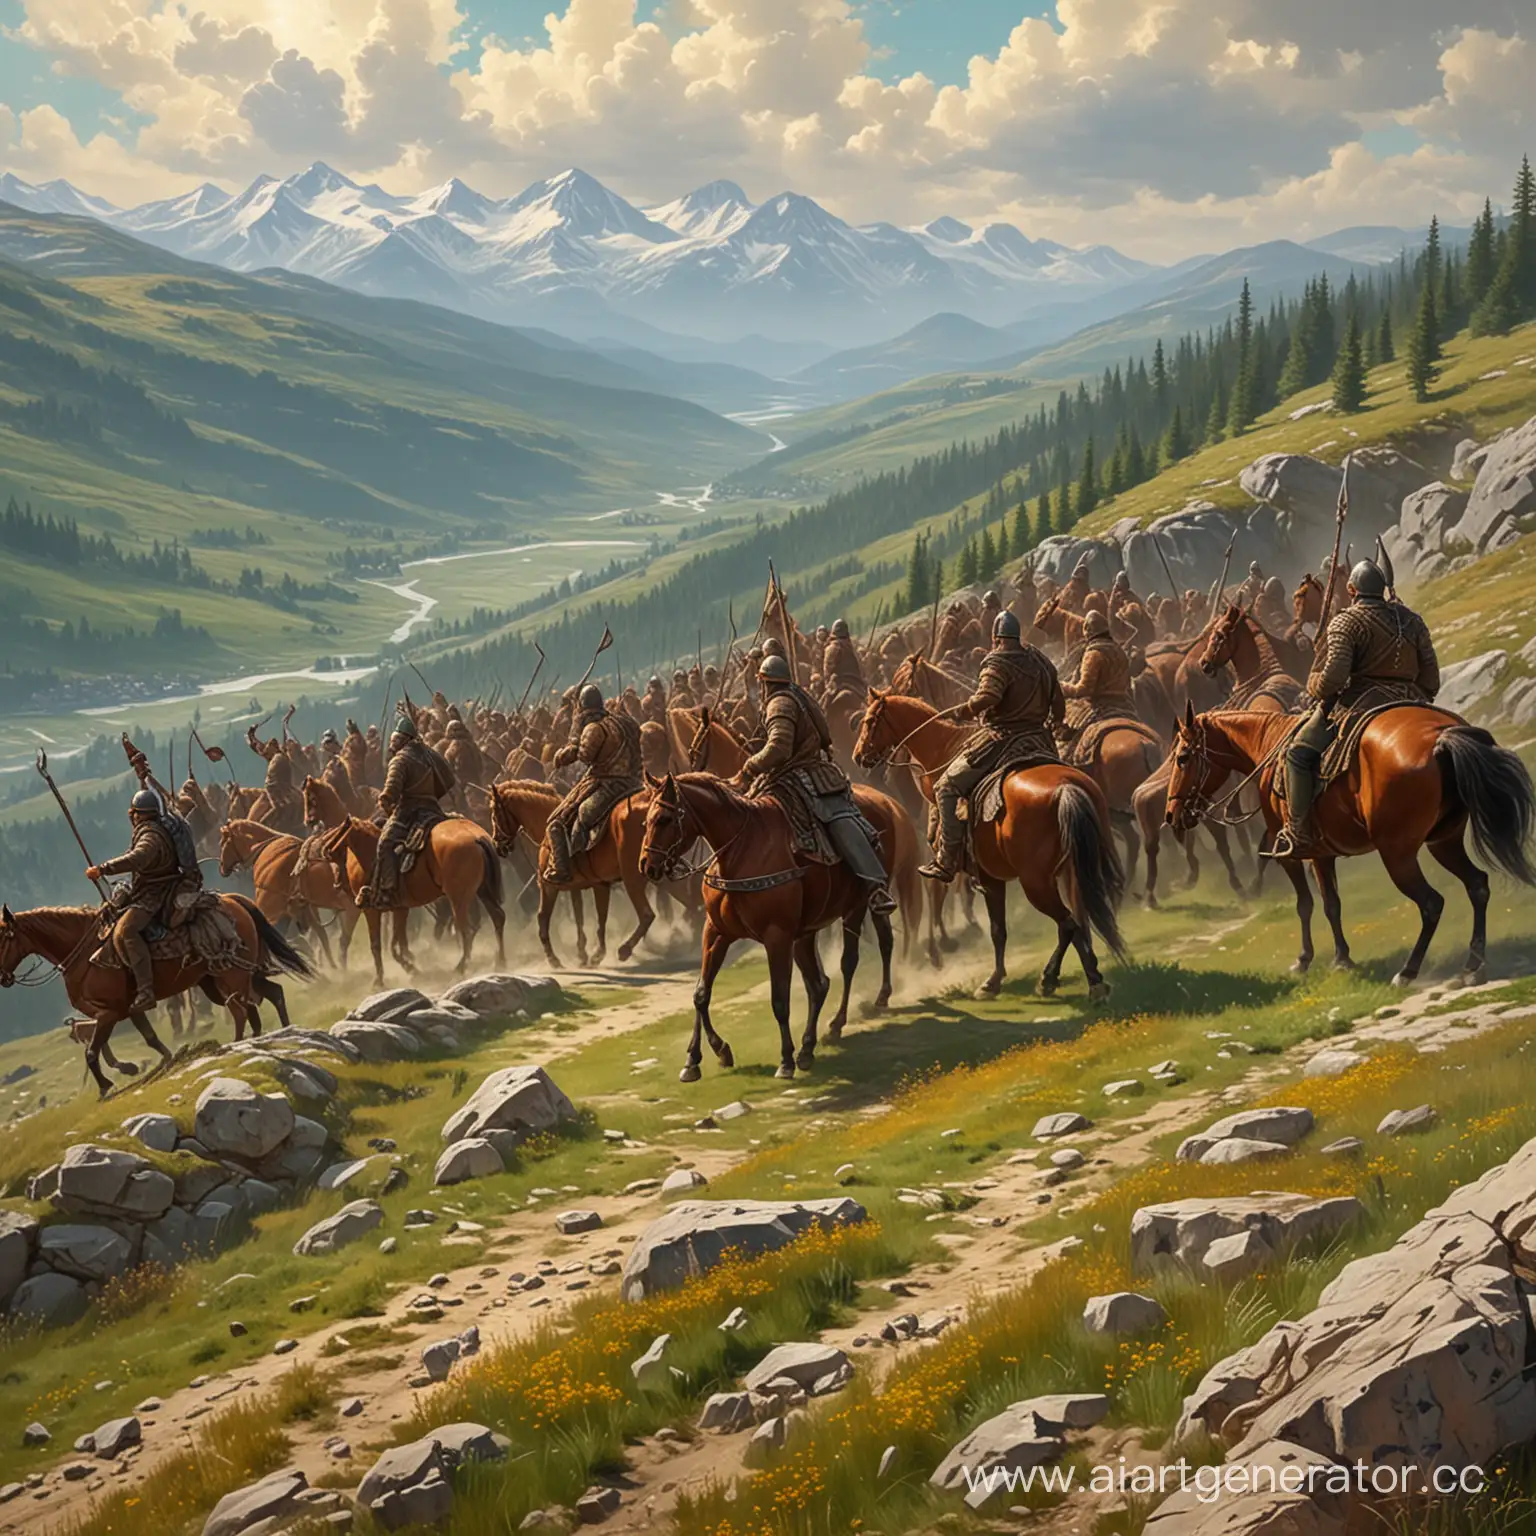 Scythians-Riding-Horses-Across-Snowy-Mountain-Peaks